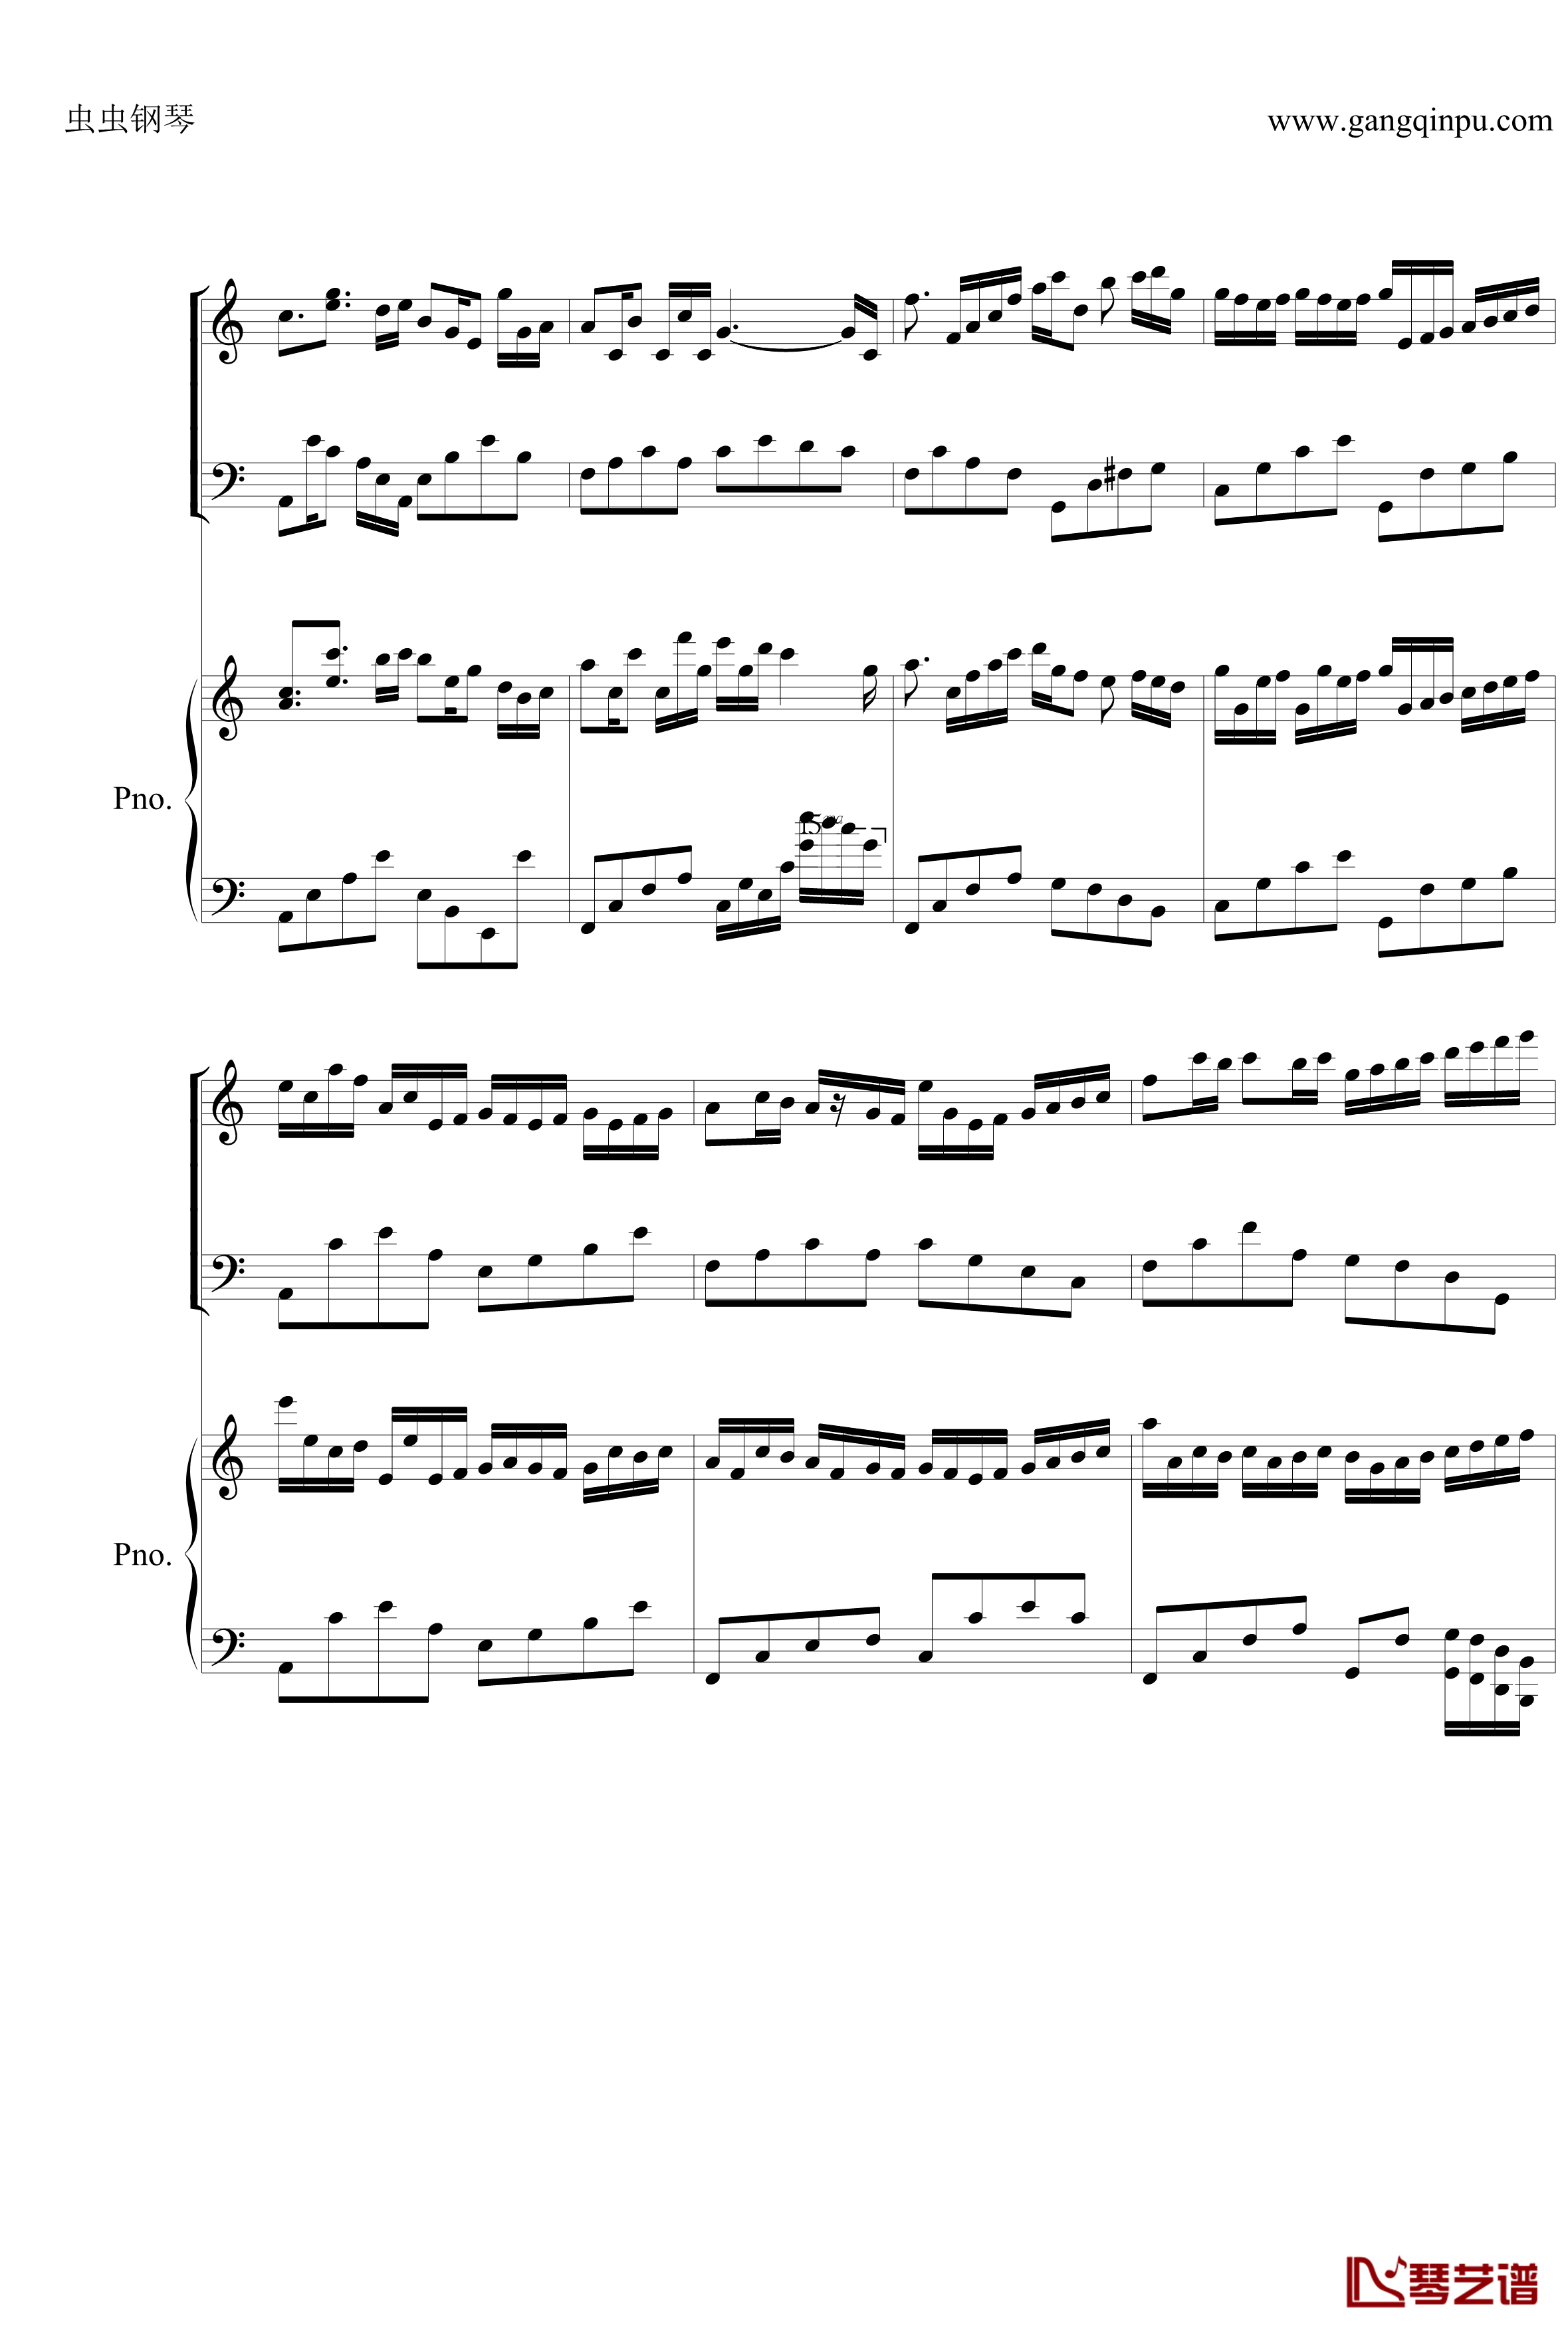 Canon双钢琴钢琴谱-仅供消遣-帕赫贝尔-Pachelbel4